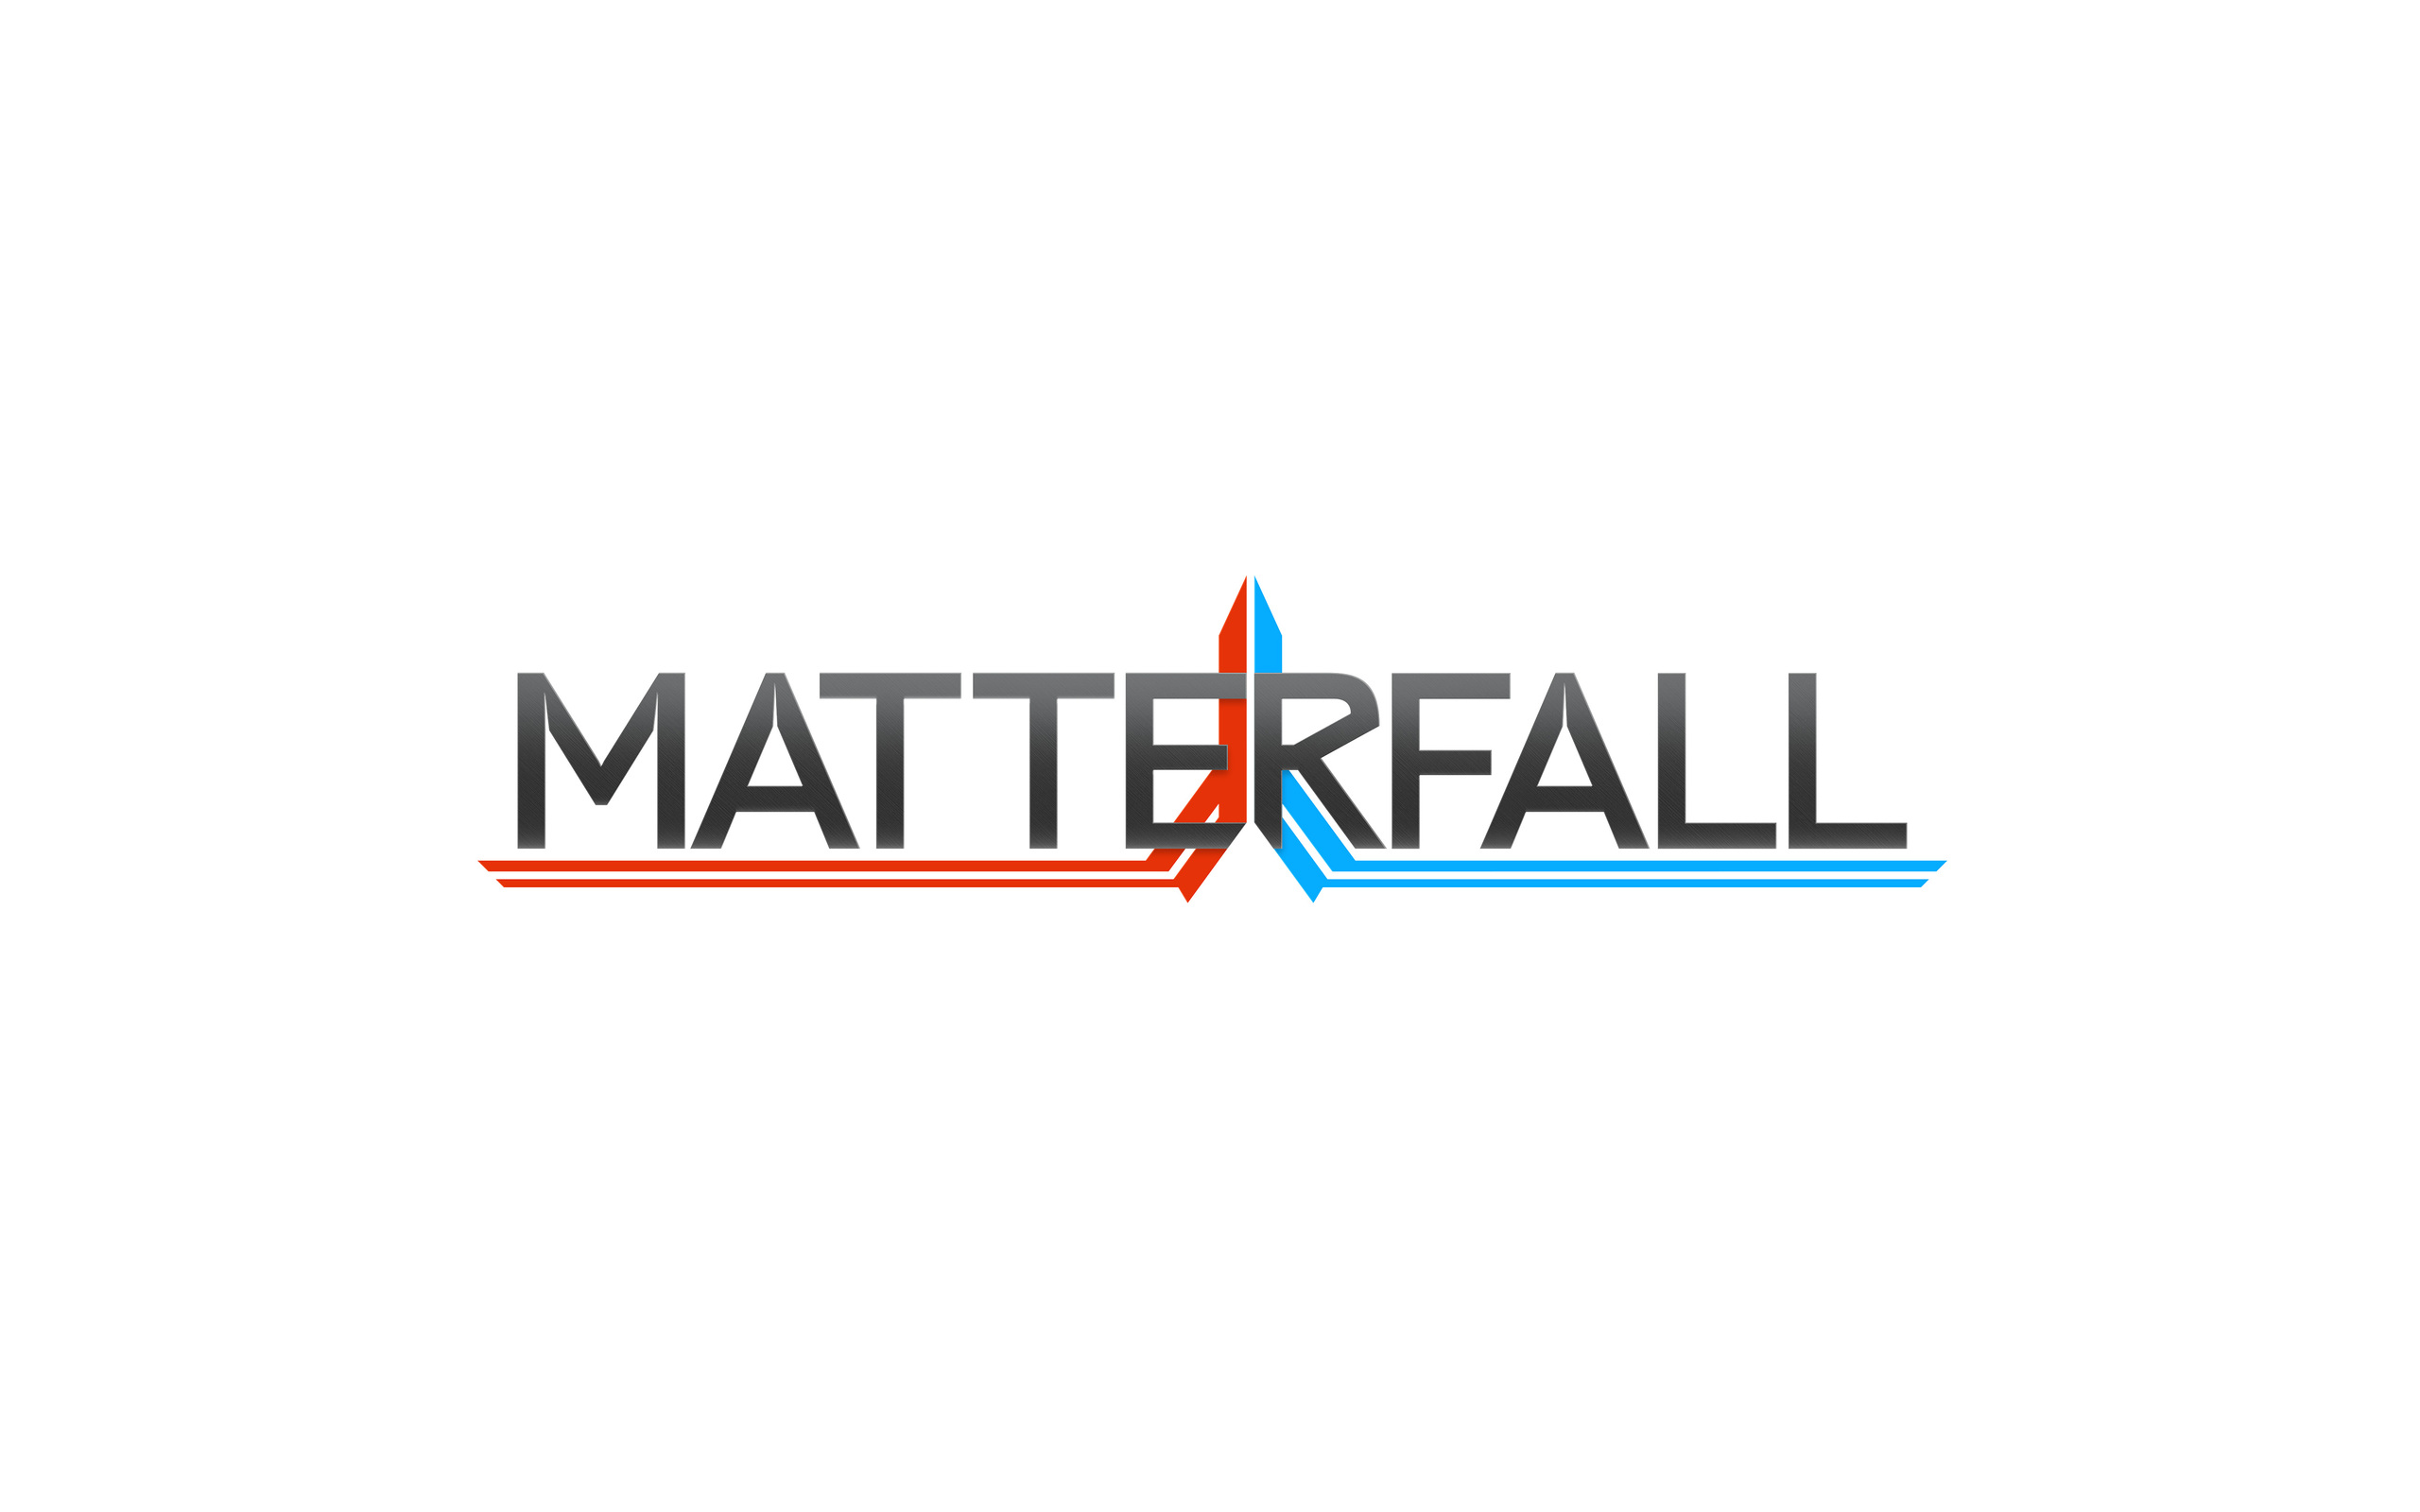 Matterfall